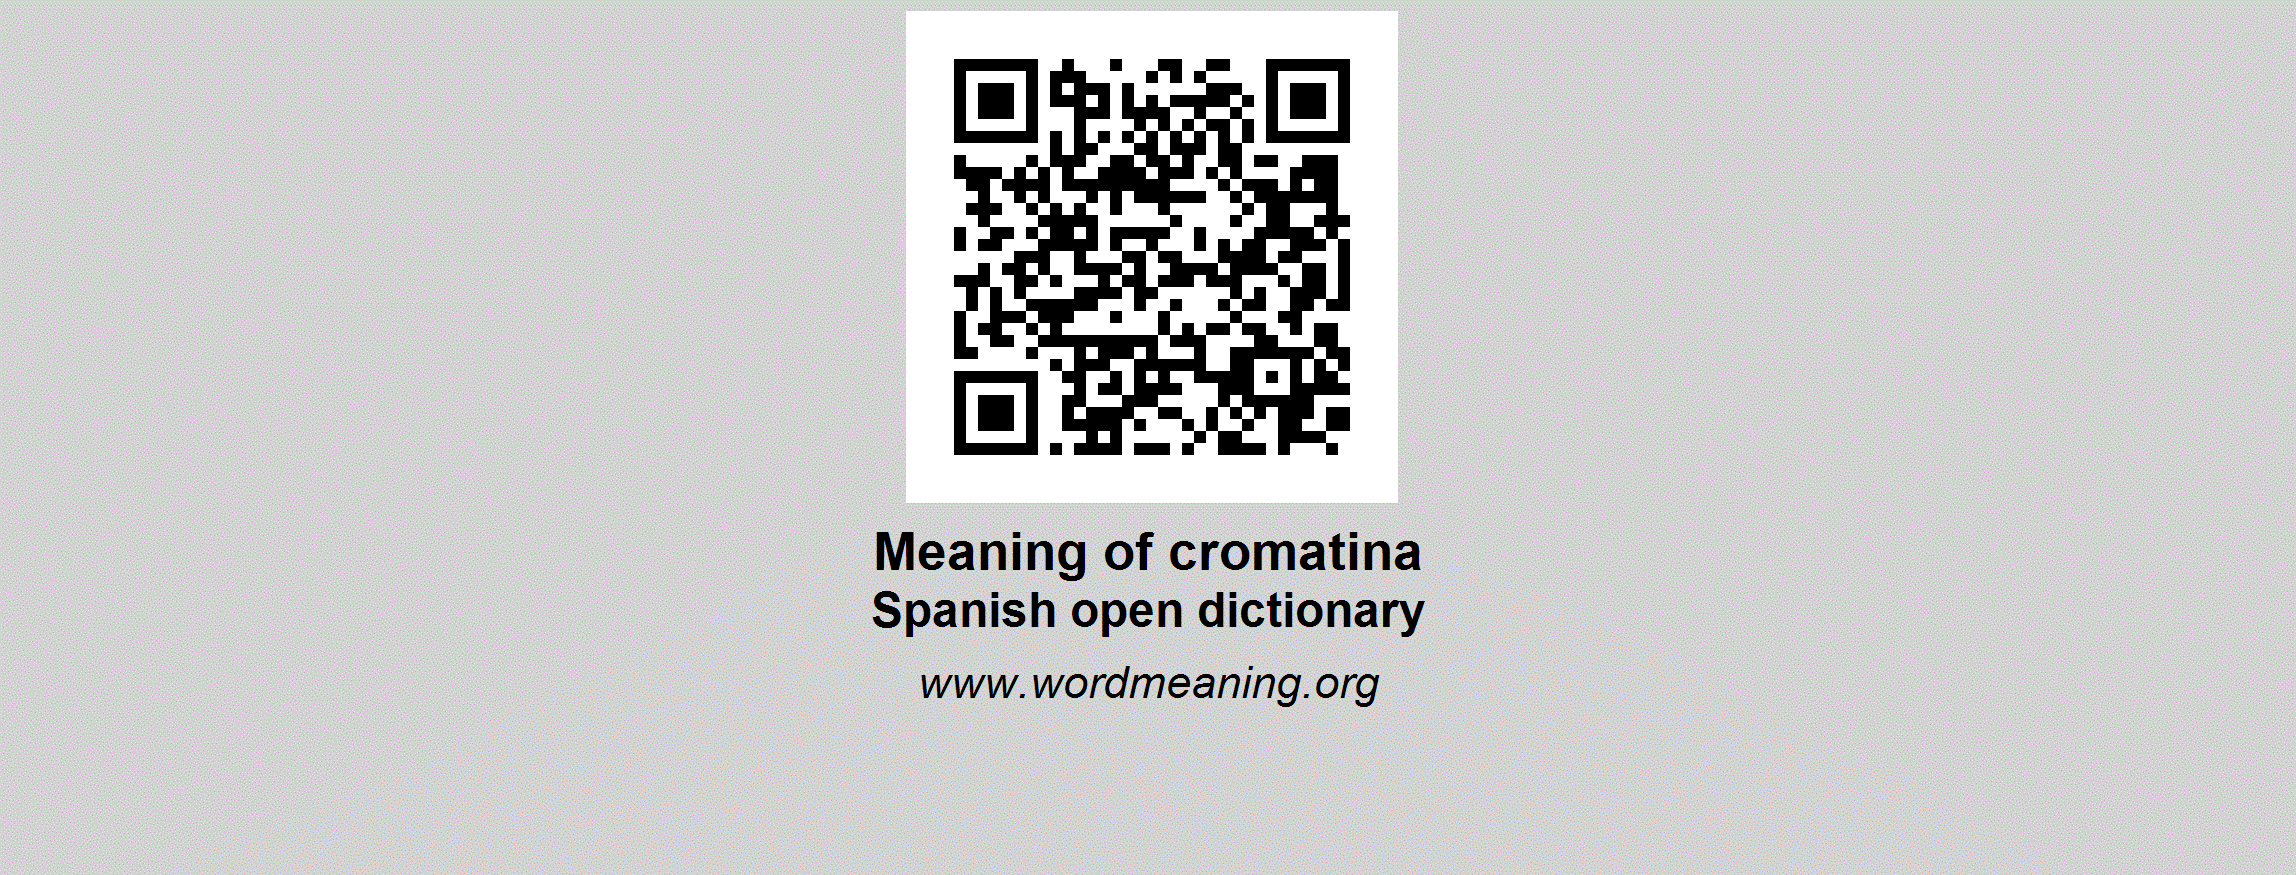 Cromatina Spanish Open Dictionary